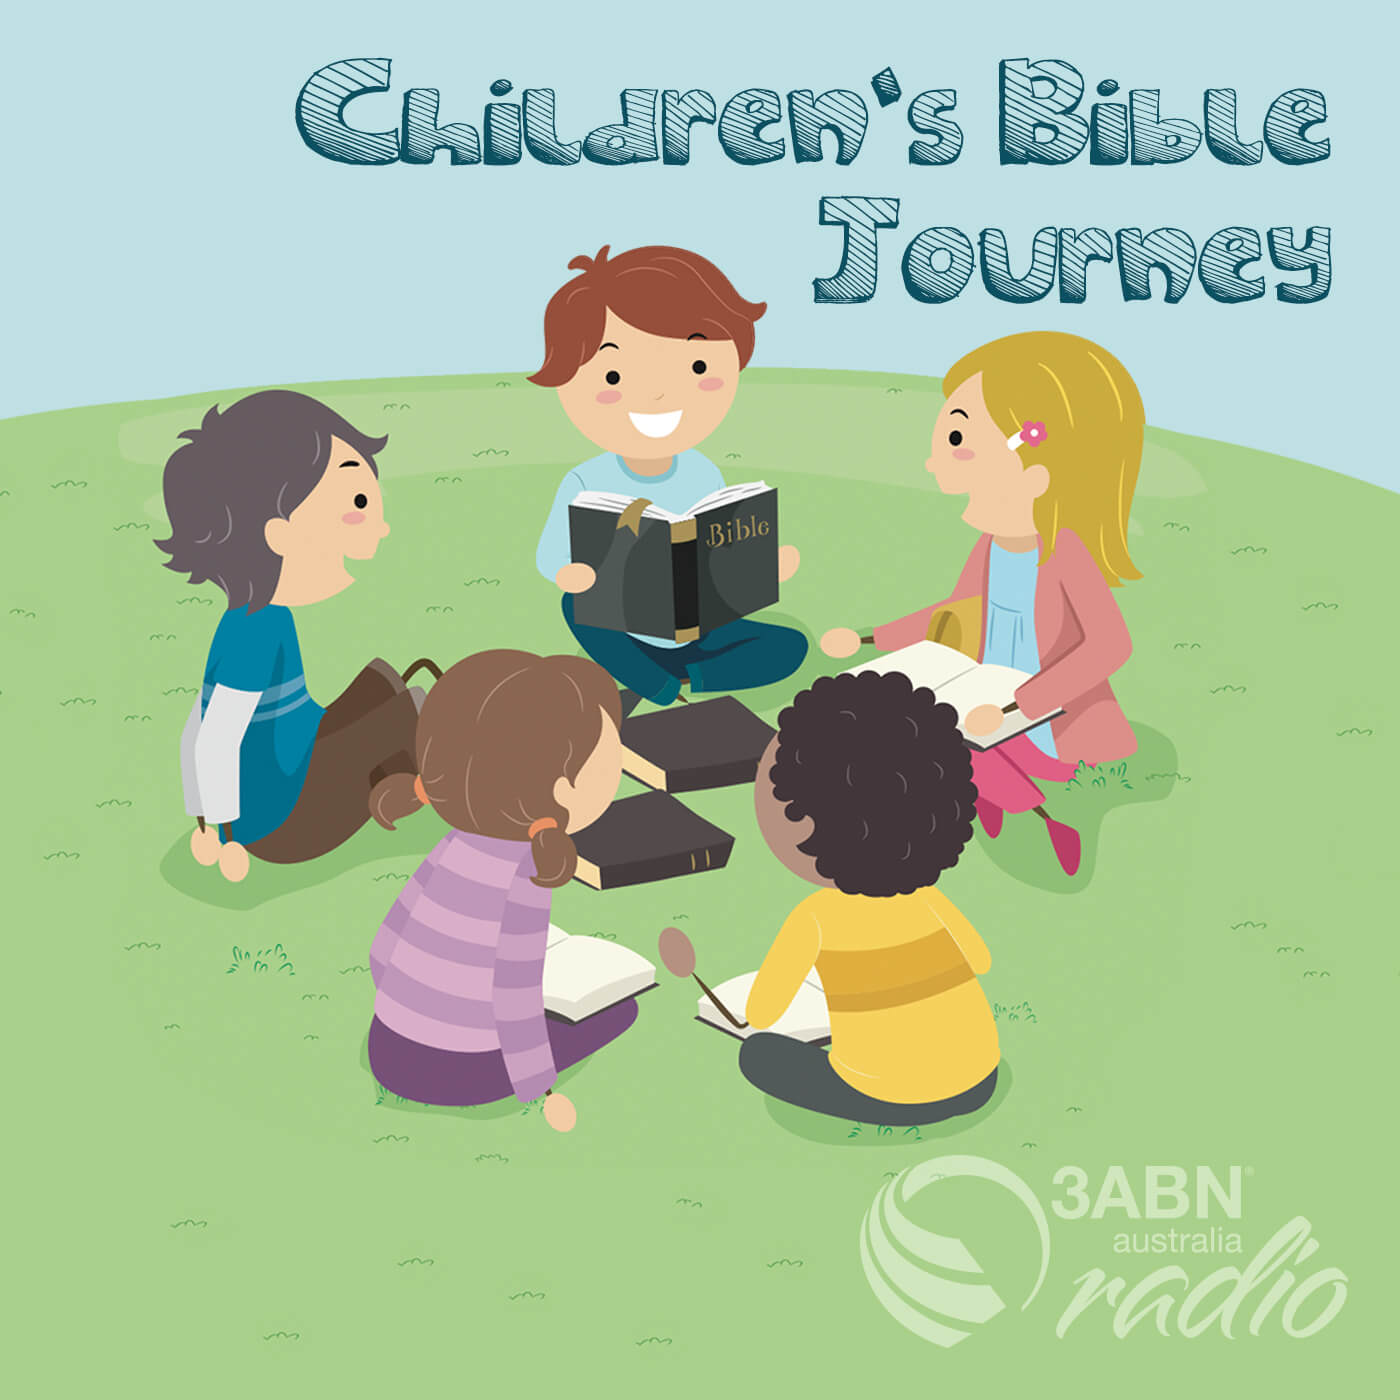 Children's Bible Journey - 2157